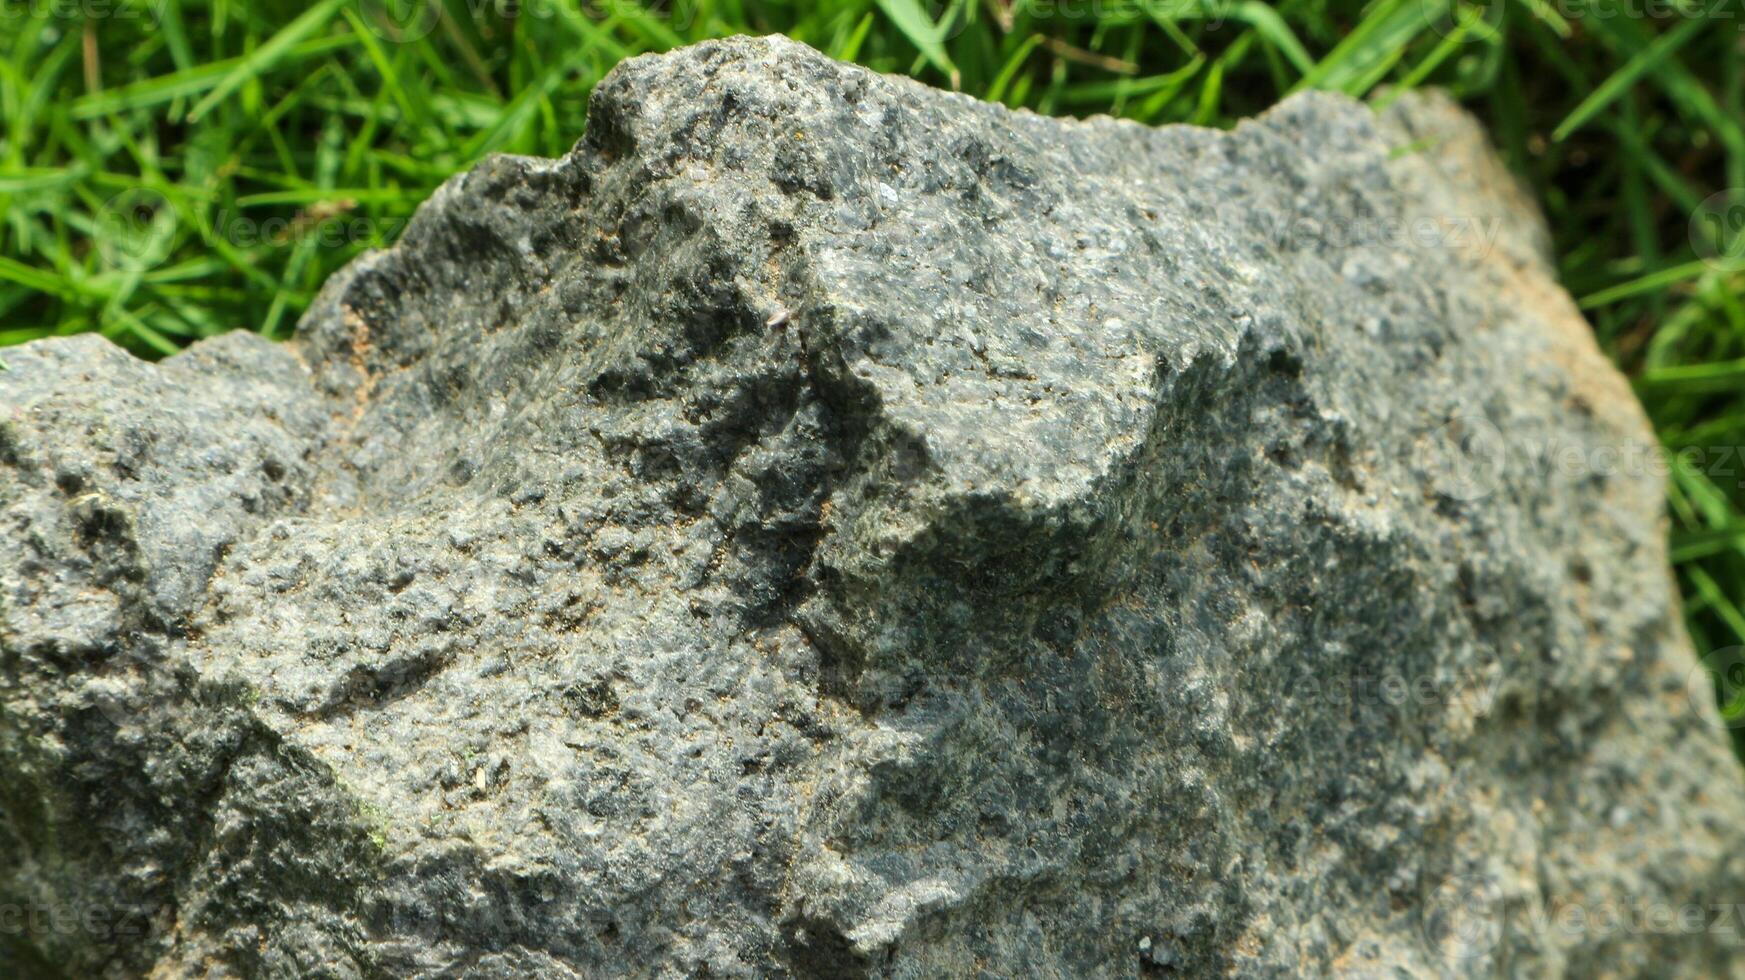 fechar-se macro foto do musgoso pedra textura em verde grama. macro foto fundo.